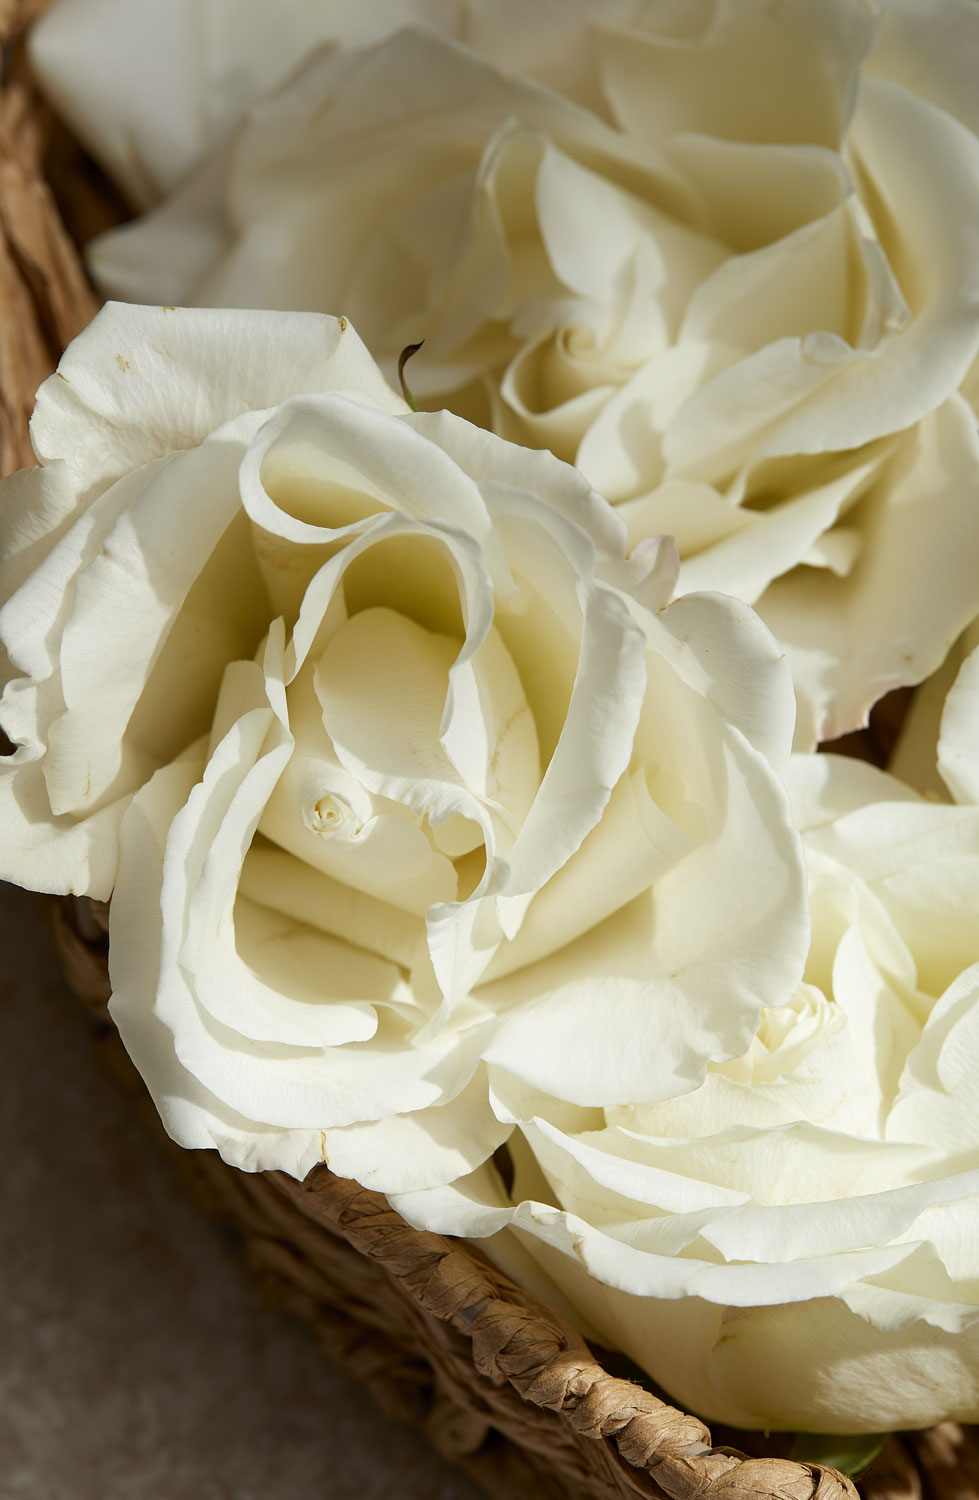 White roses fragrance cue